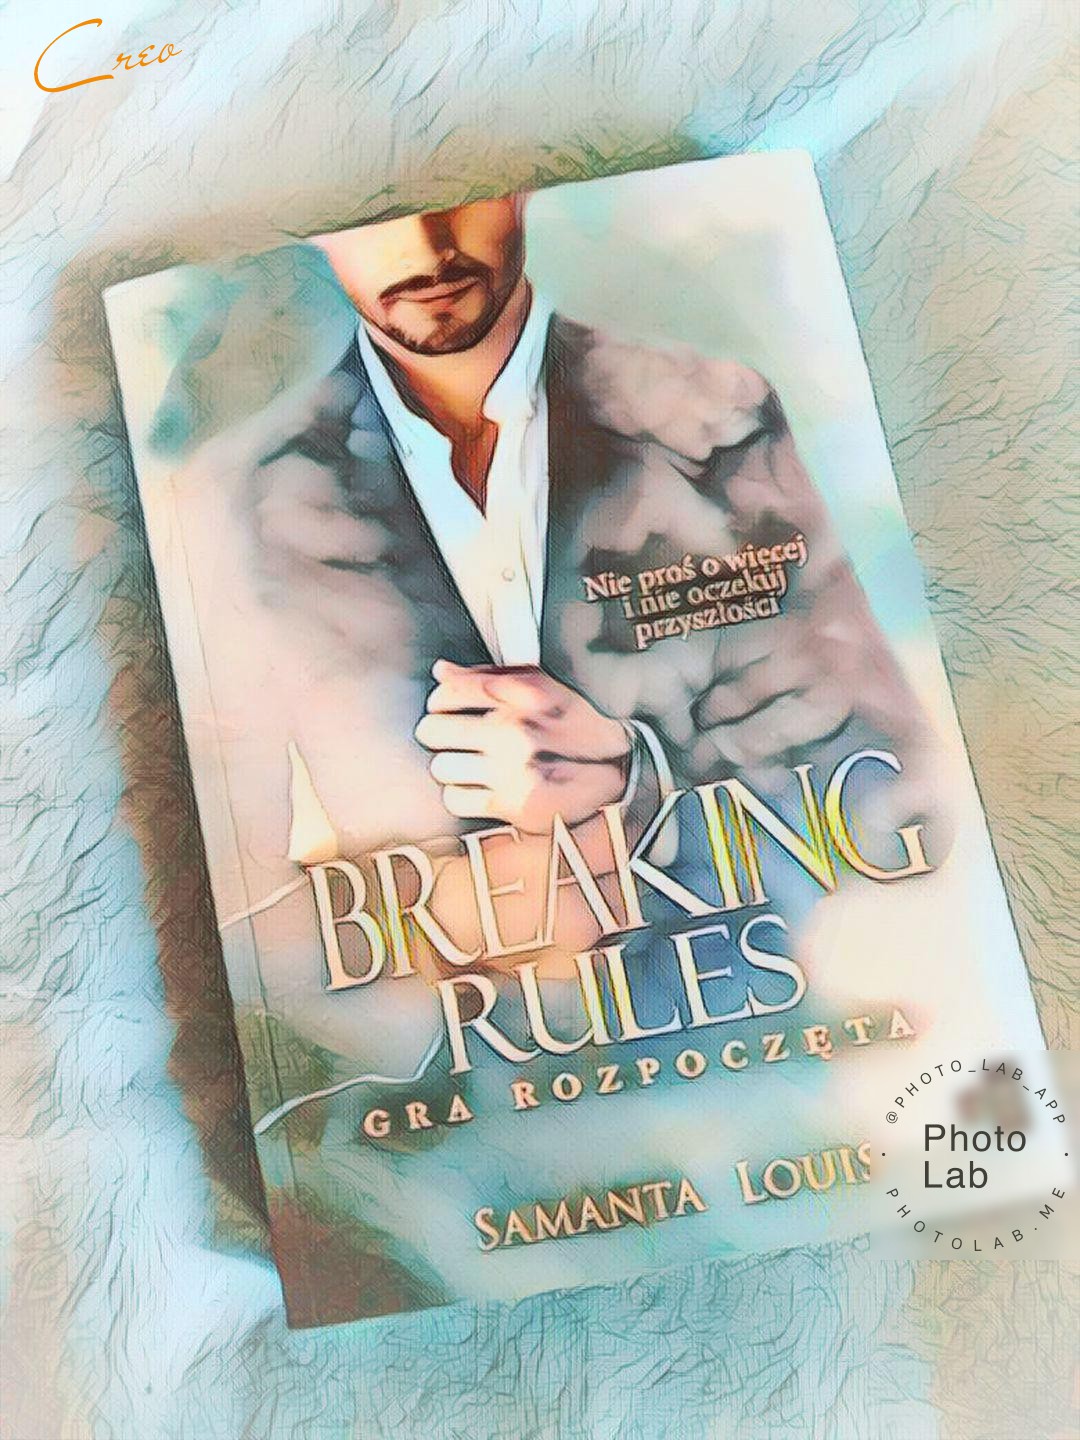 „Breaking rules. Gra rozpoczęta” Samanta Luois